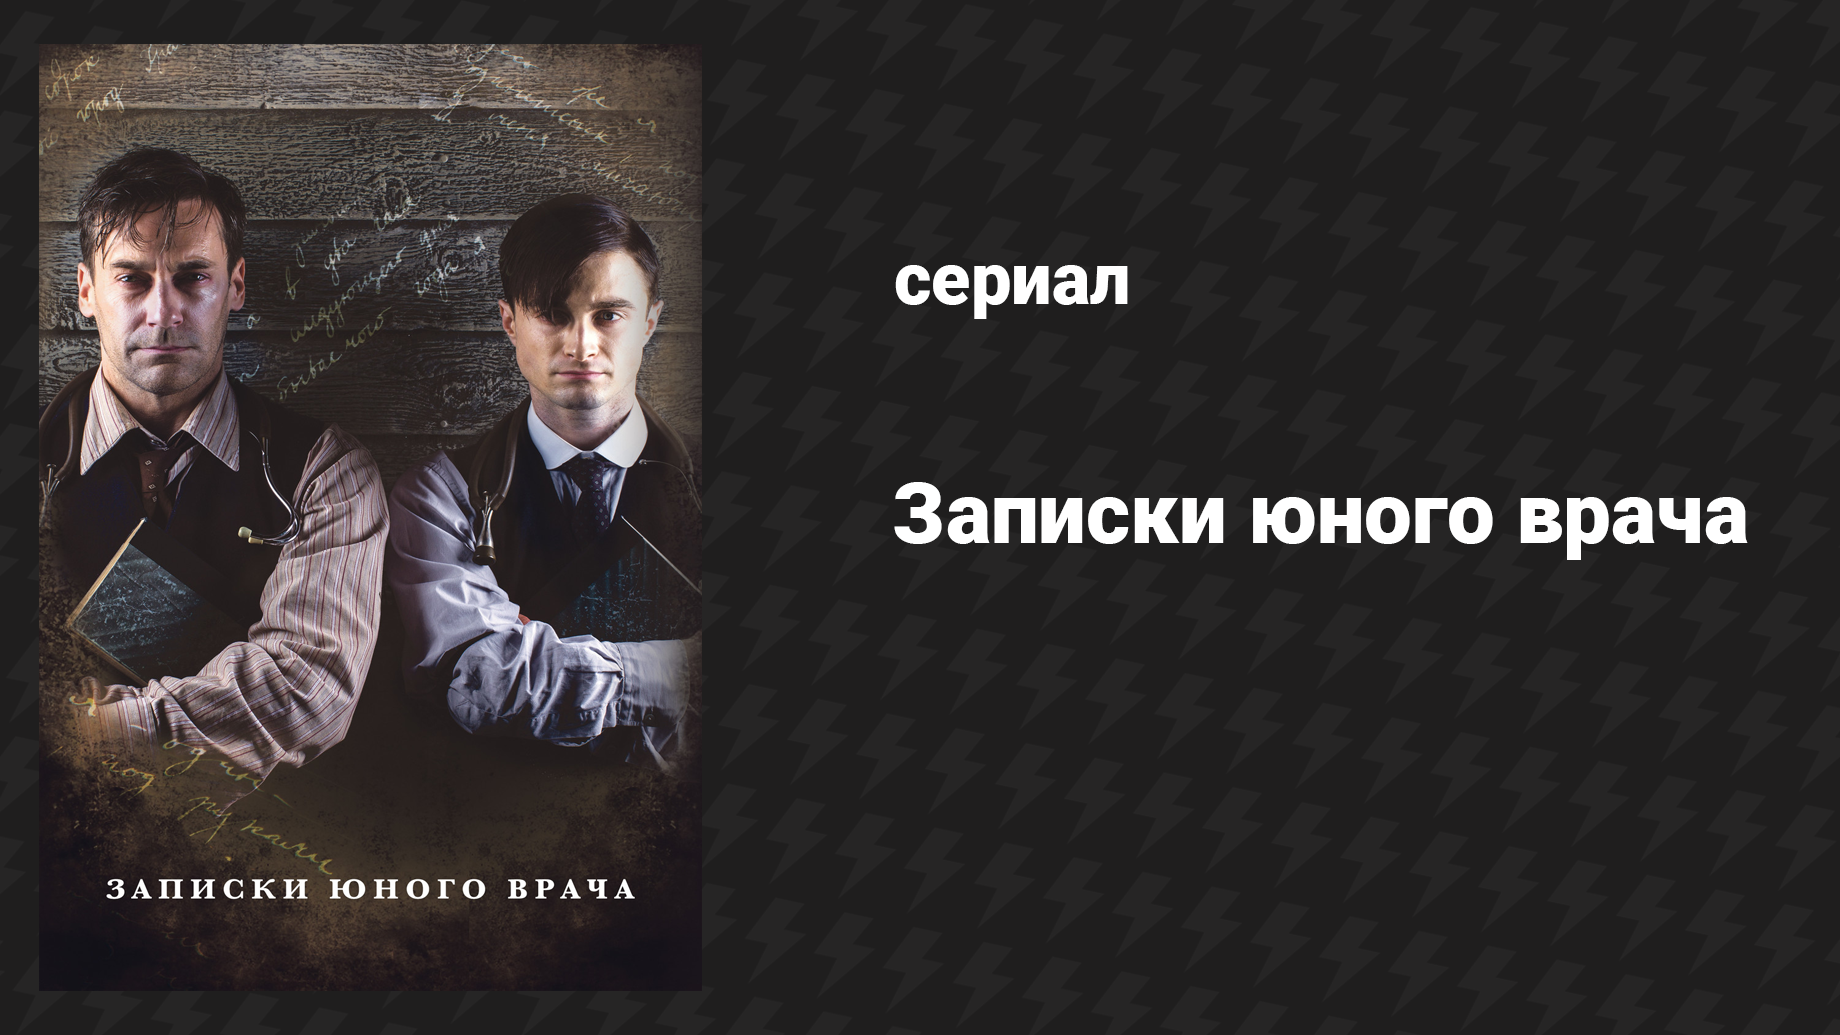 Записки юного врача 1 сезон 1 серия (сериал, 2012)